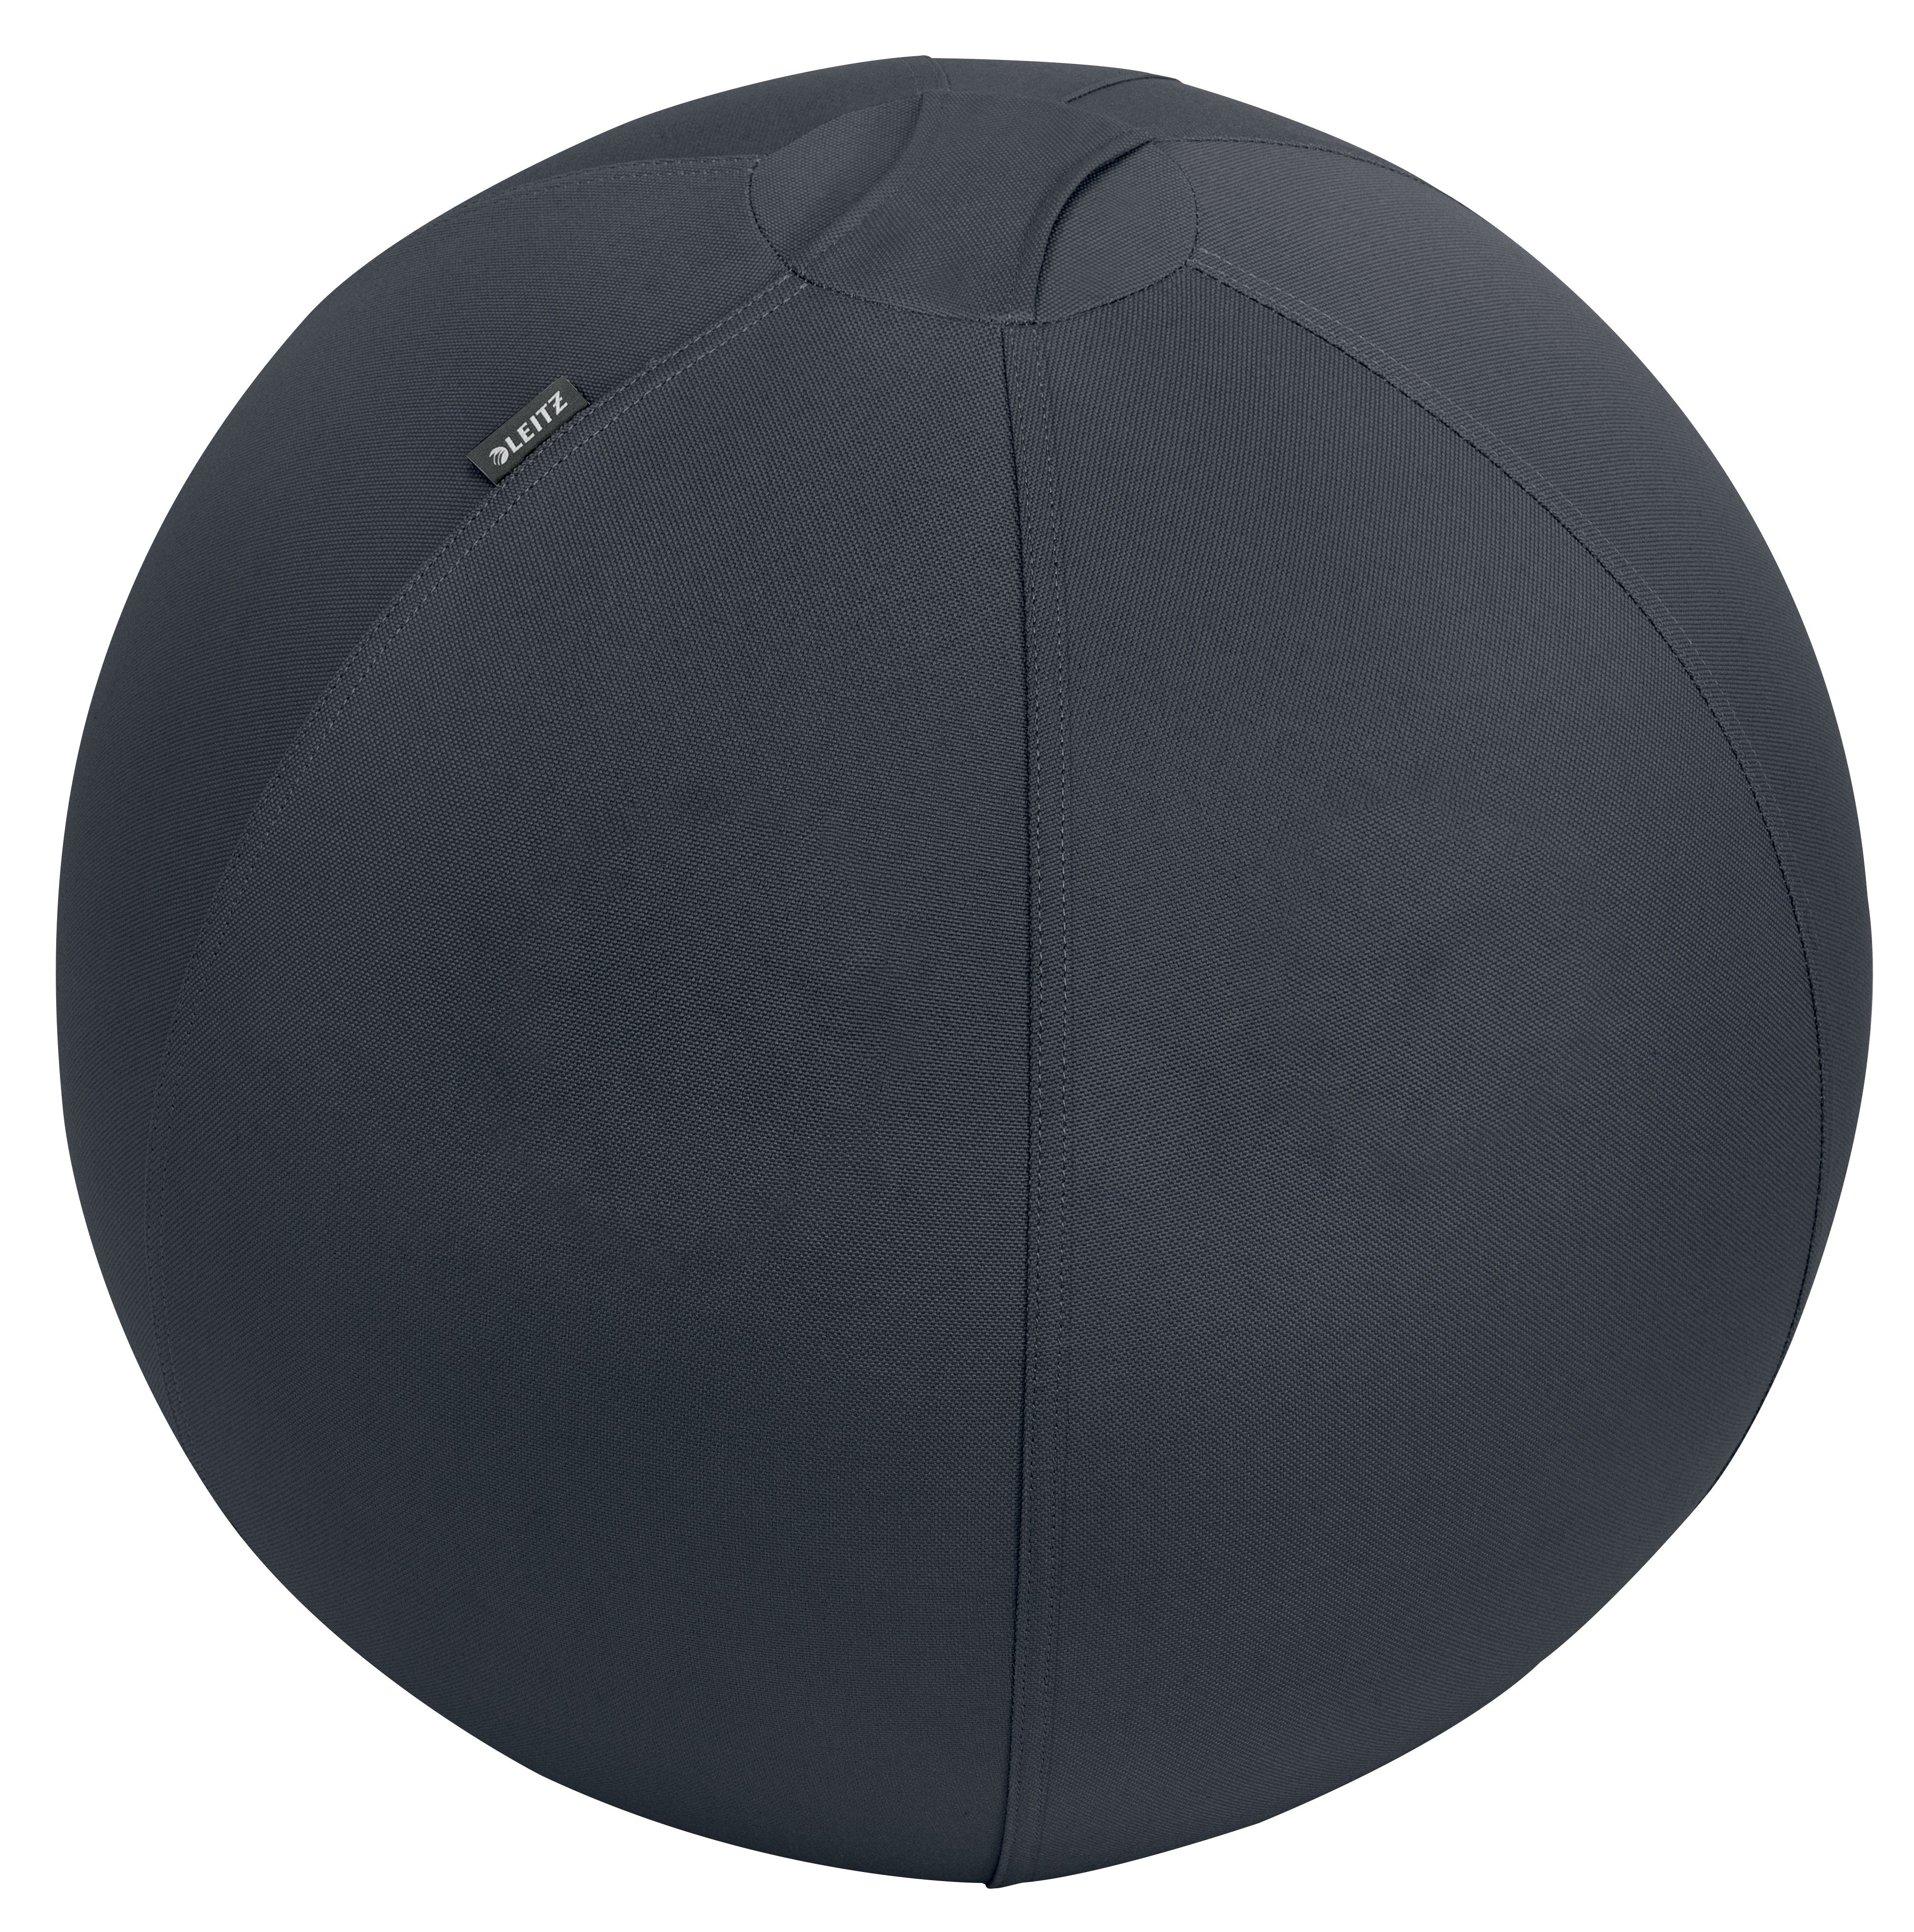 Billede af Leitz - Ergo Balance ball anti-roll-away 55cm - Dark grey